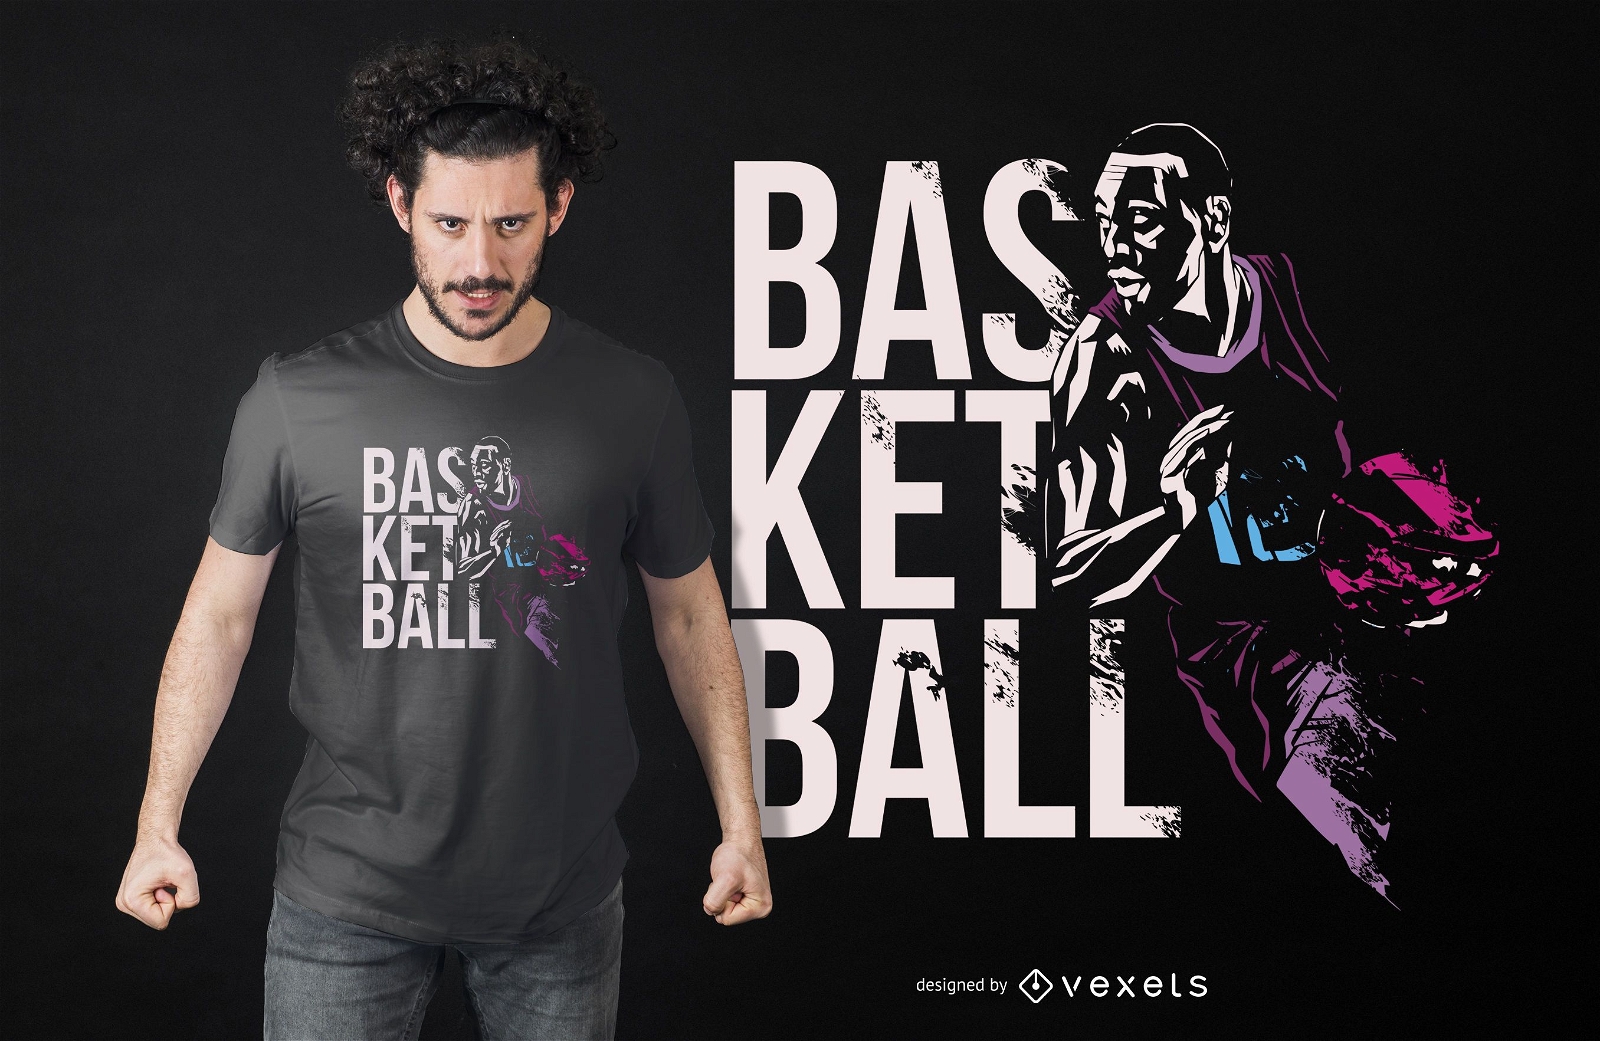 unique basketball shirt designs